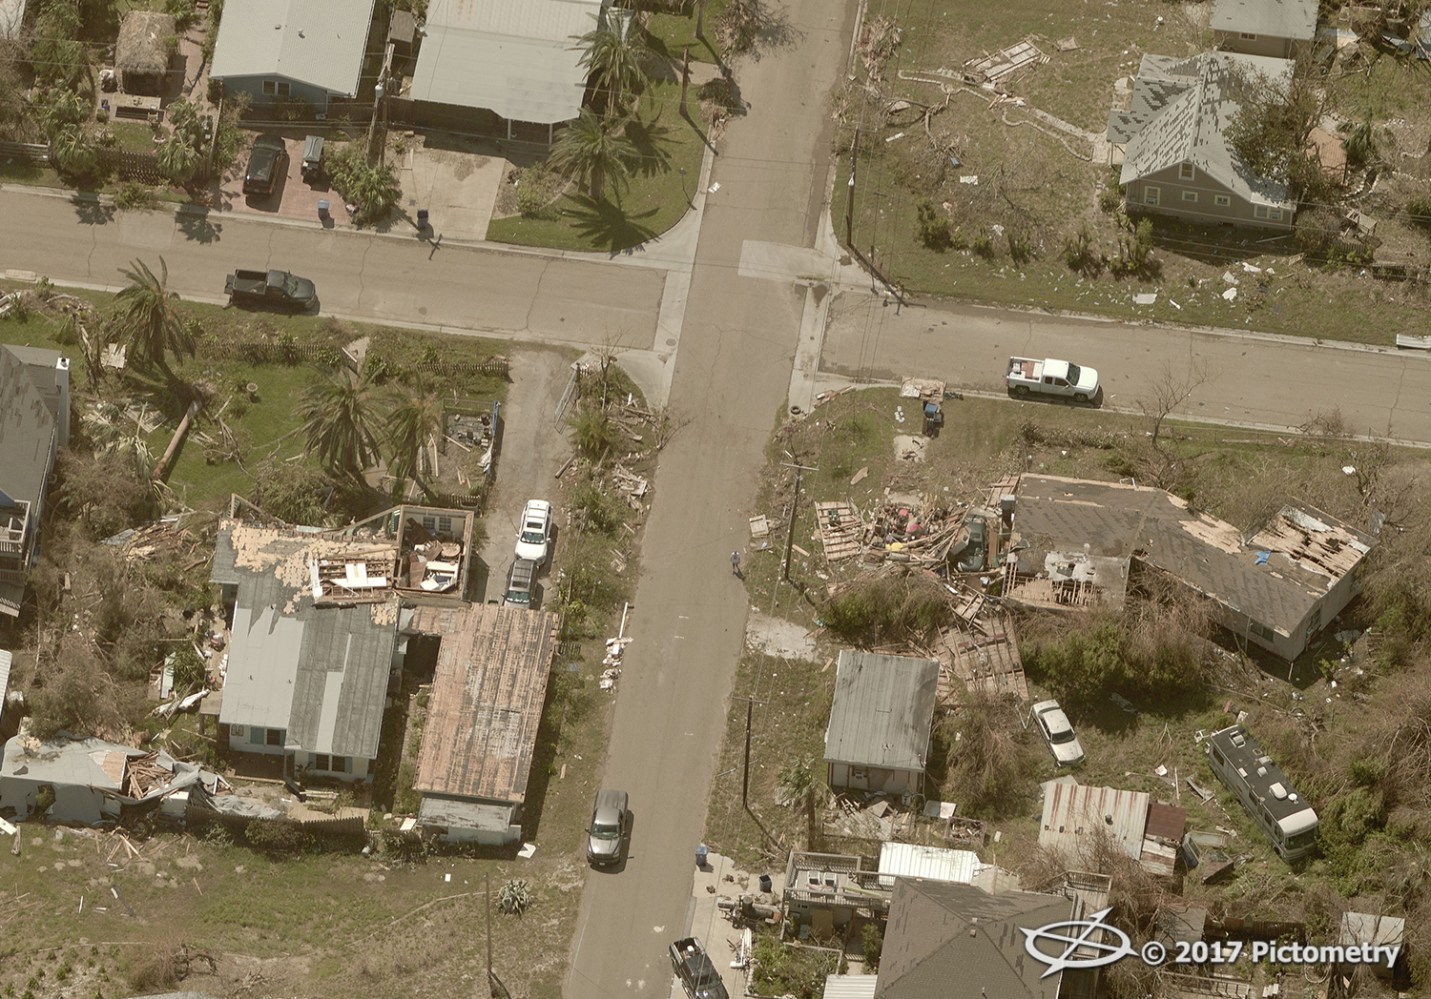 Imagery of a Texas neighborhood after Hurricane Harvey.